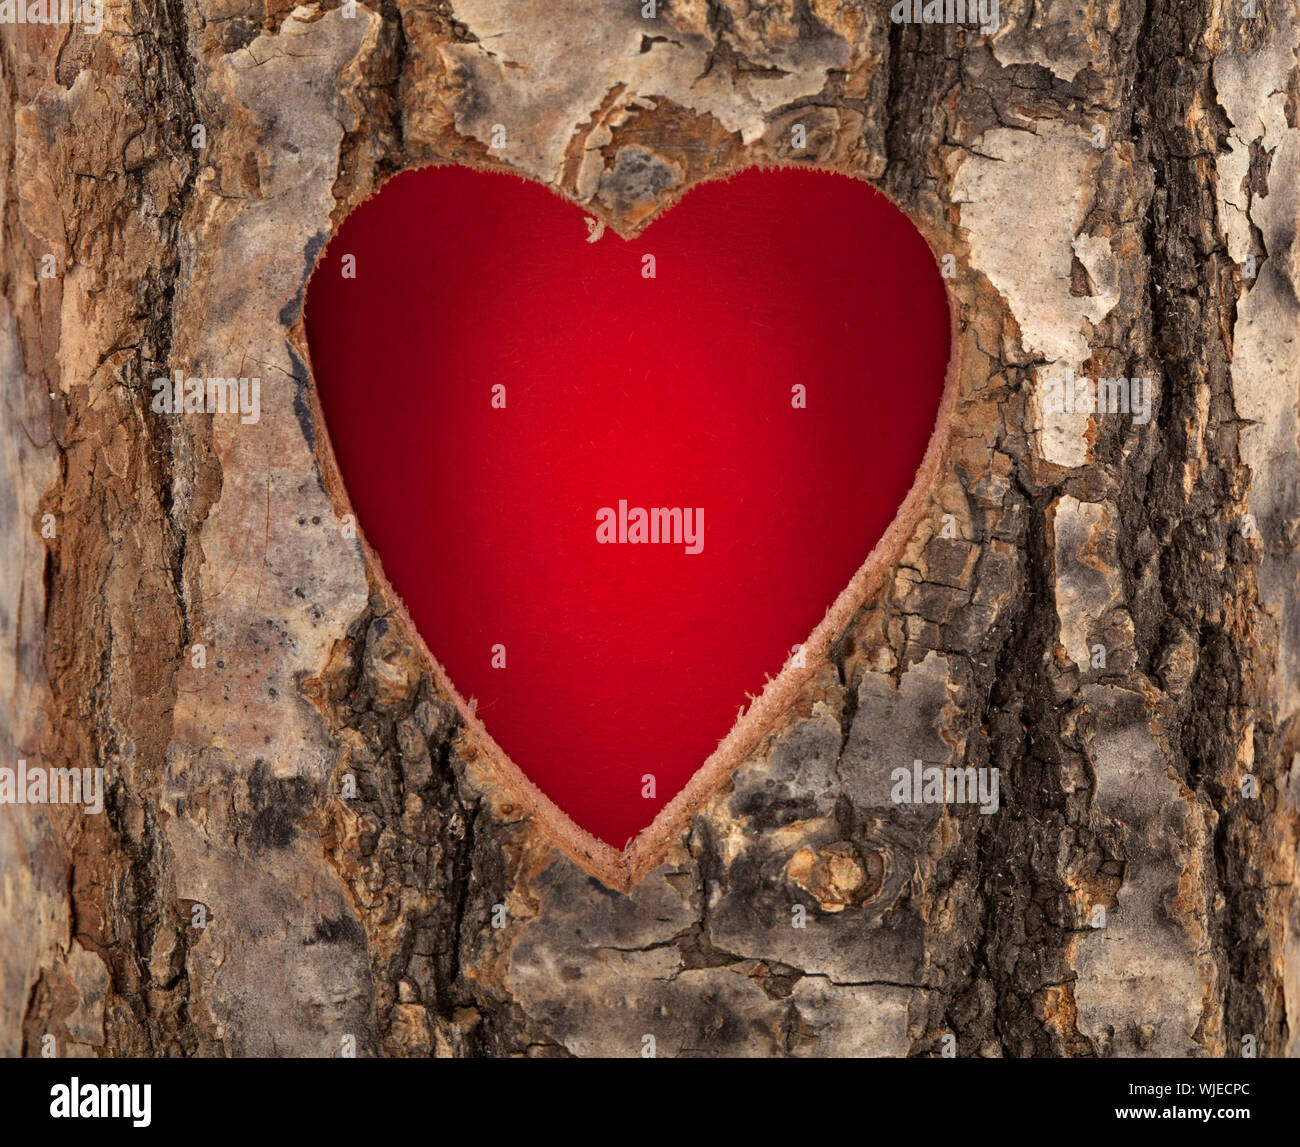 heart cut in hollow tree trunk Stock Photo